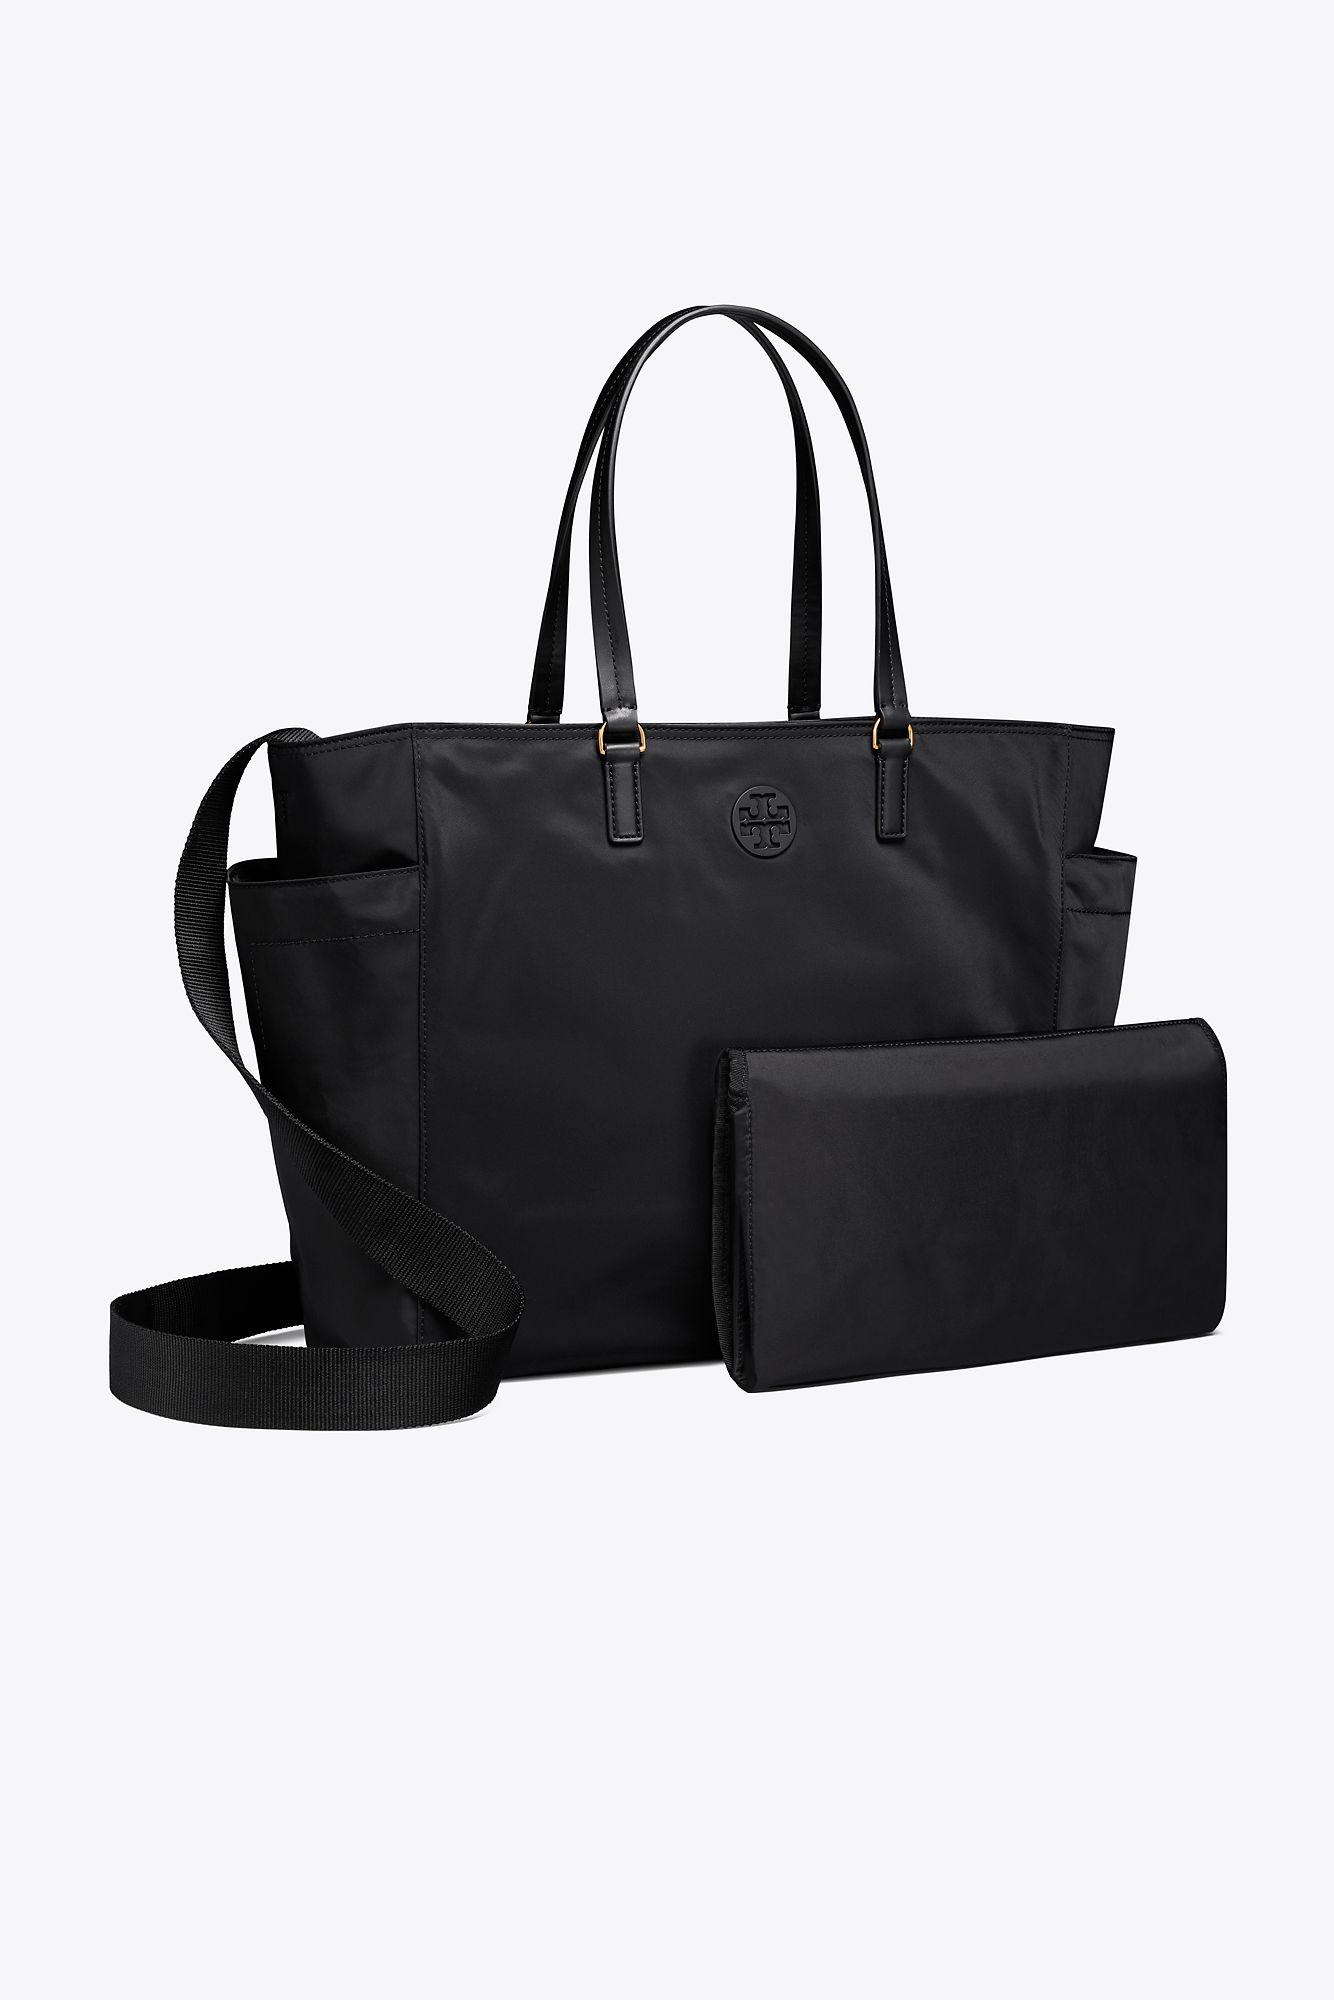 Tory Burch Synthetic Tilda Nylon Baby Bag in Black - Lyst